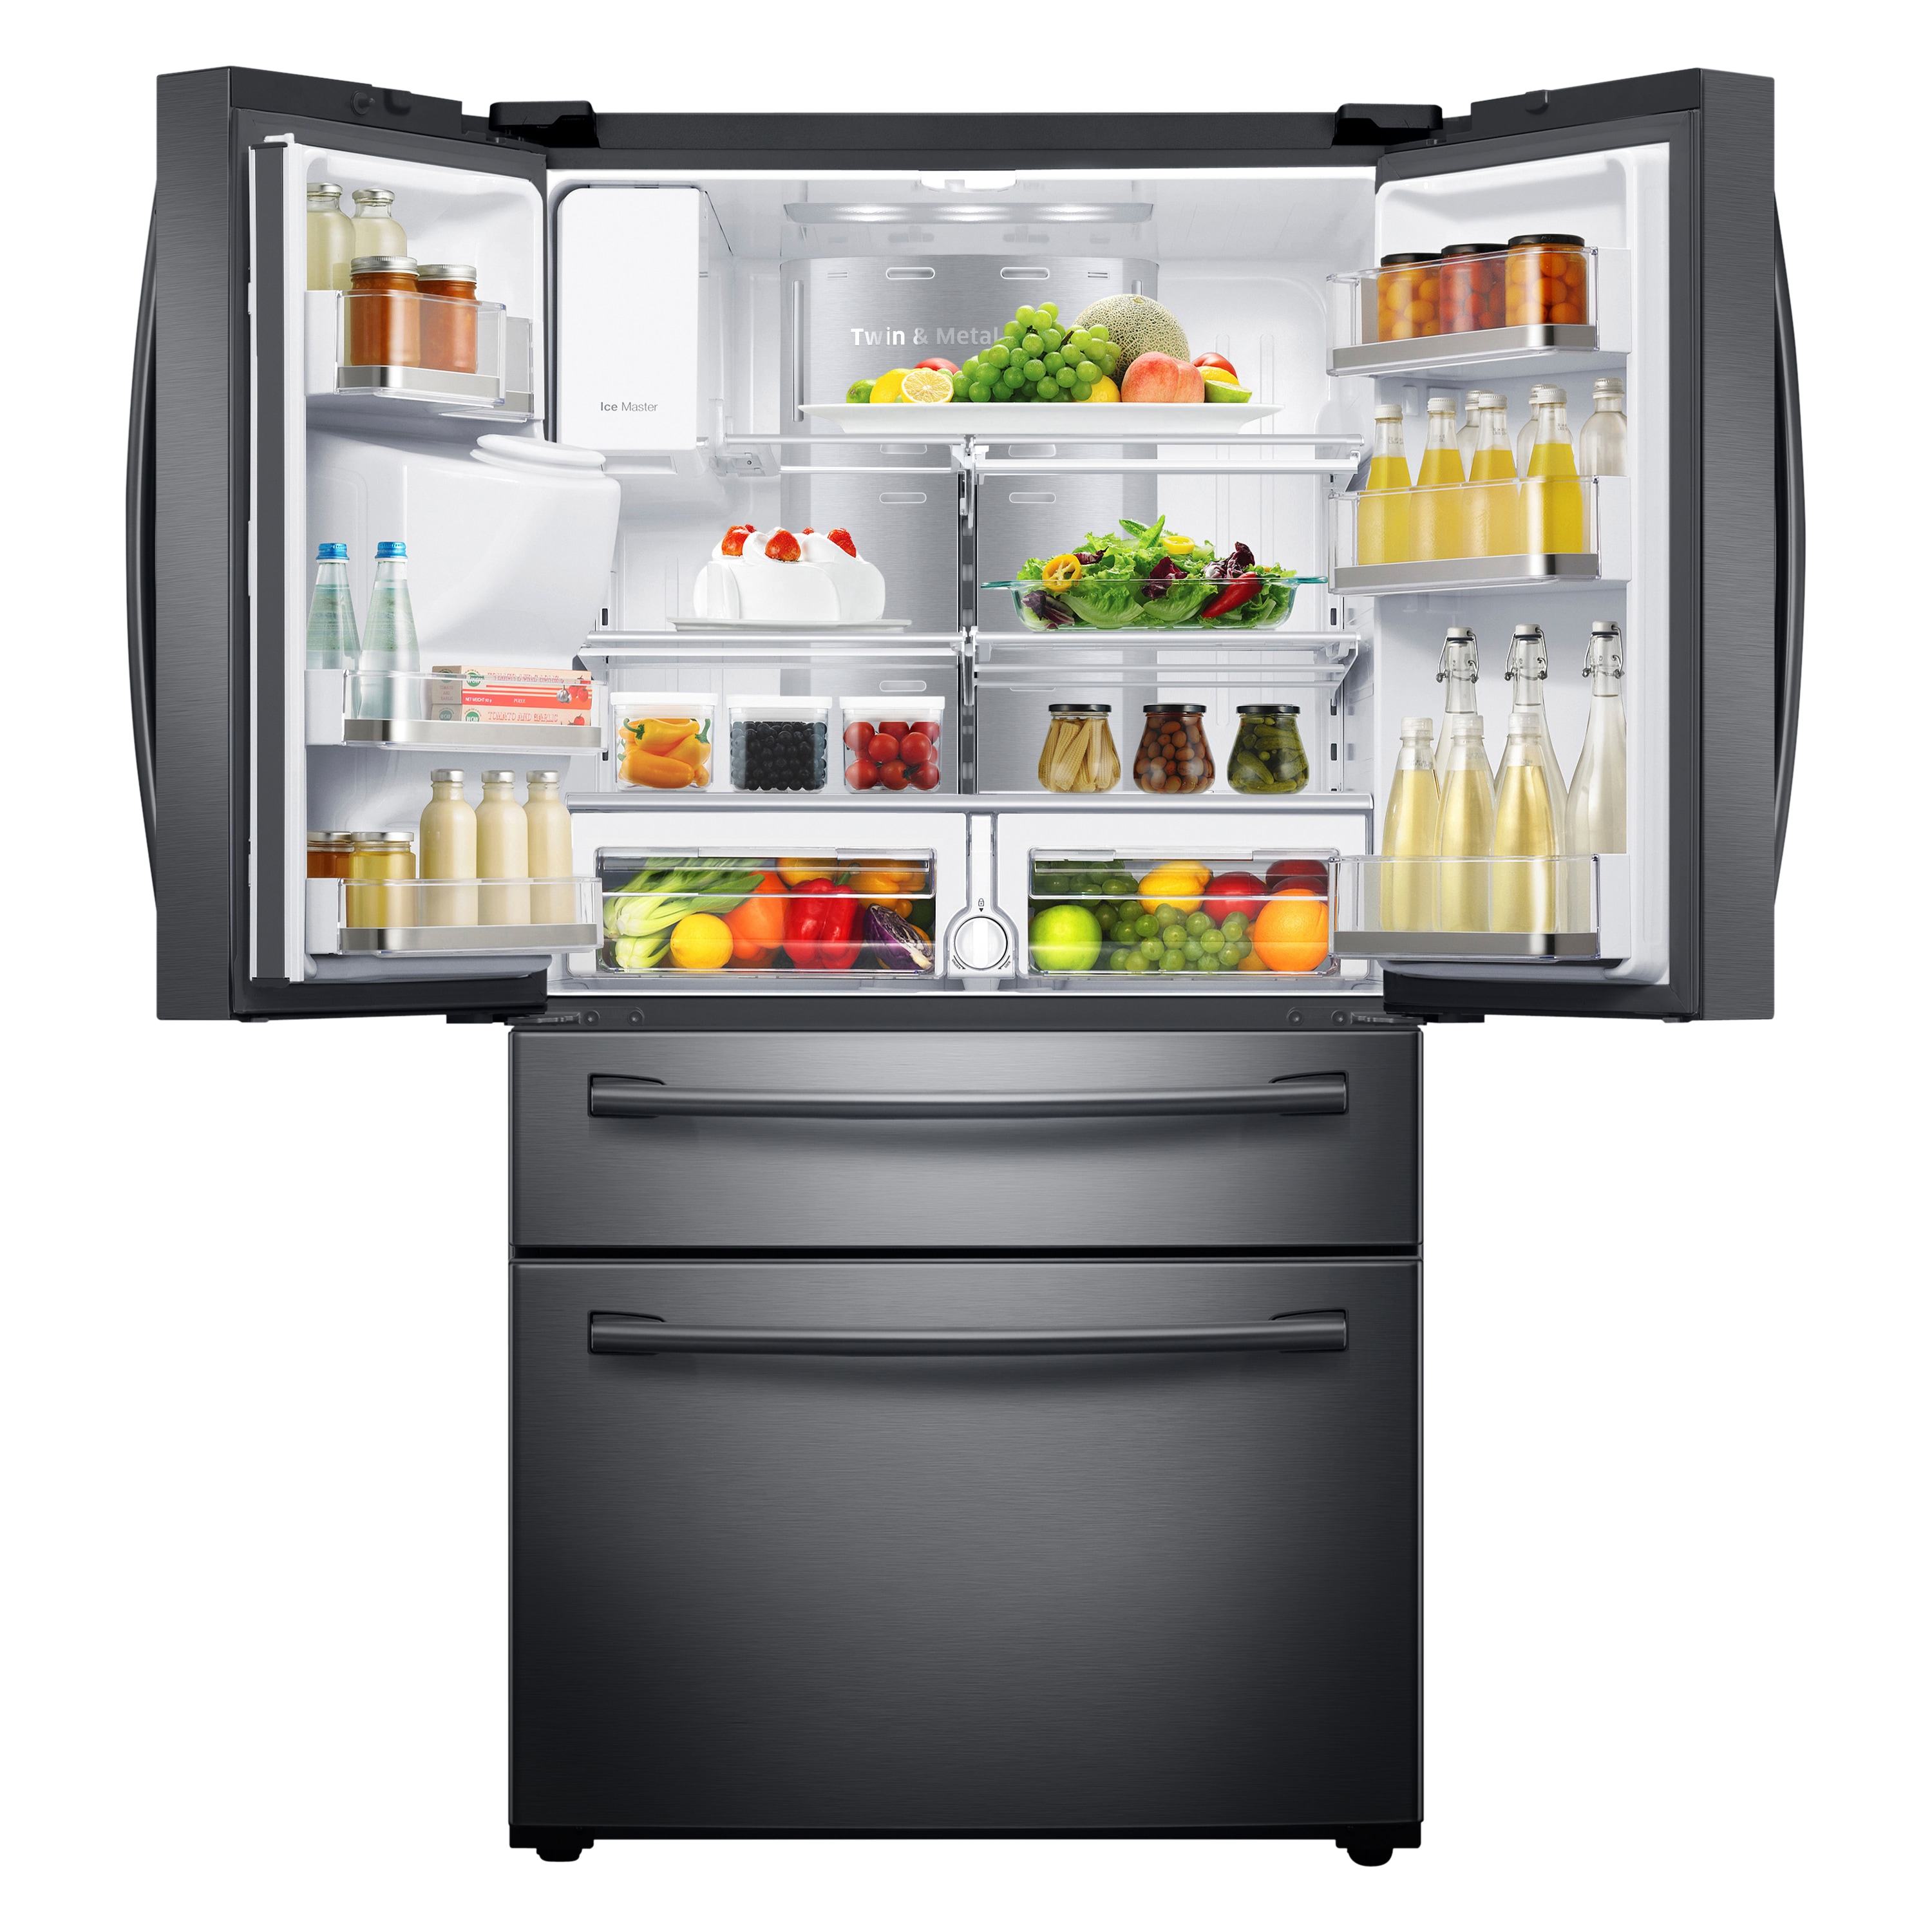 Samsung Electronics Debuts Next Generation of Family Hub Refrigerator at  CES 2018 - Samsung US Newsroom